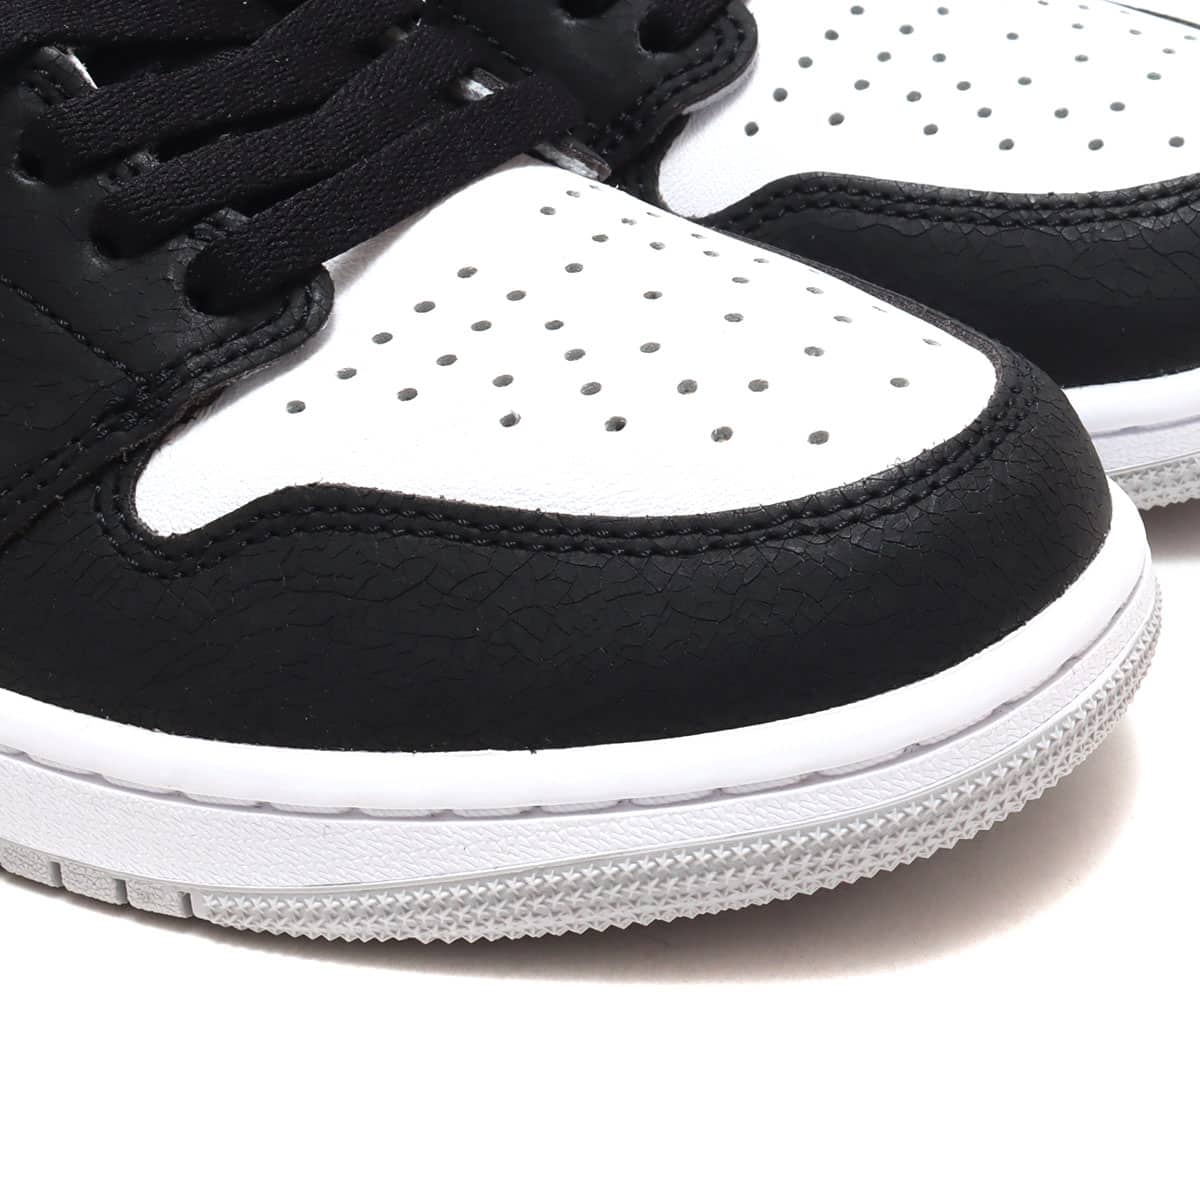 Nike Air Jordan 1 High '85 "Black/White